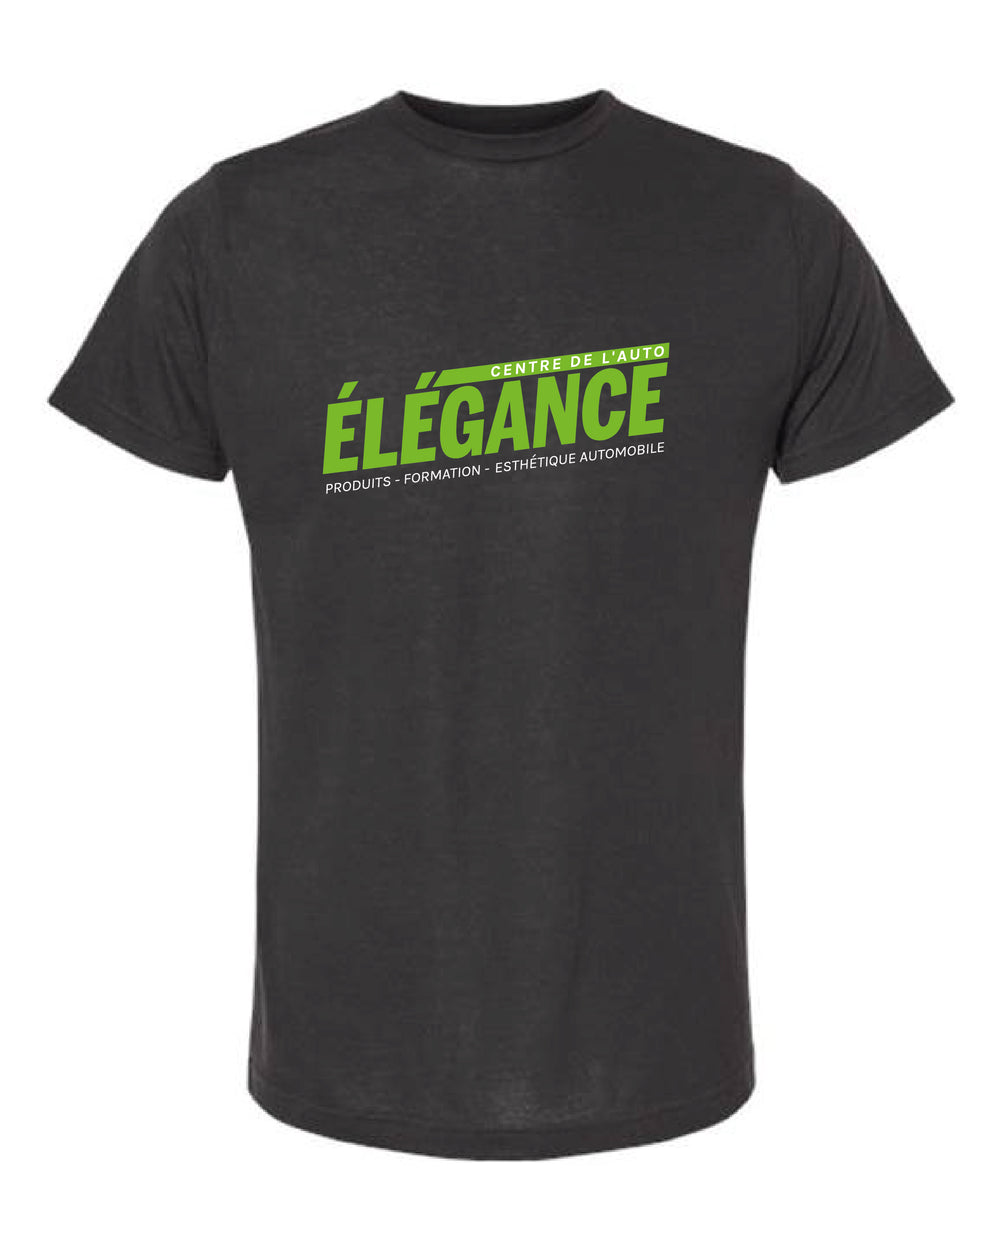 CLOTHING - ELEGANCE XL T-Shirt